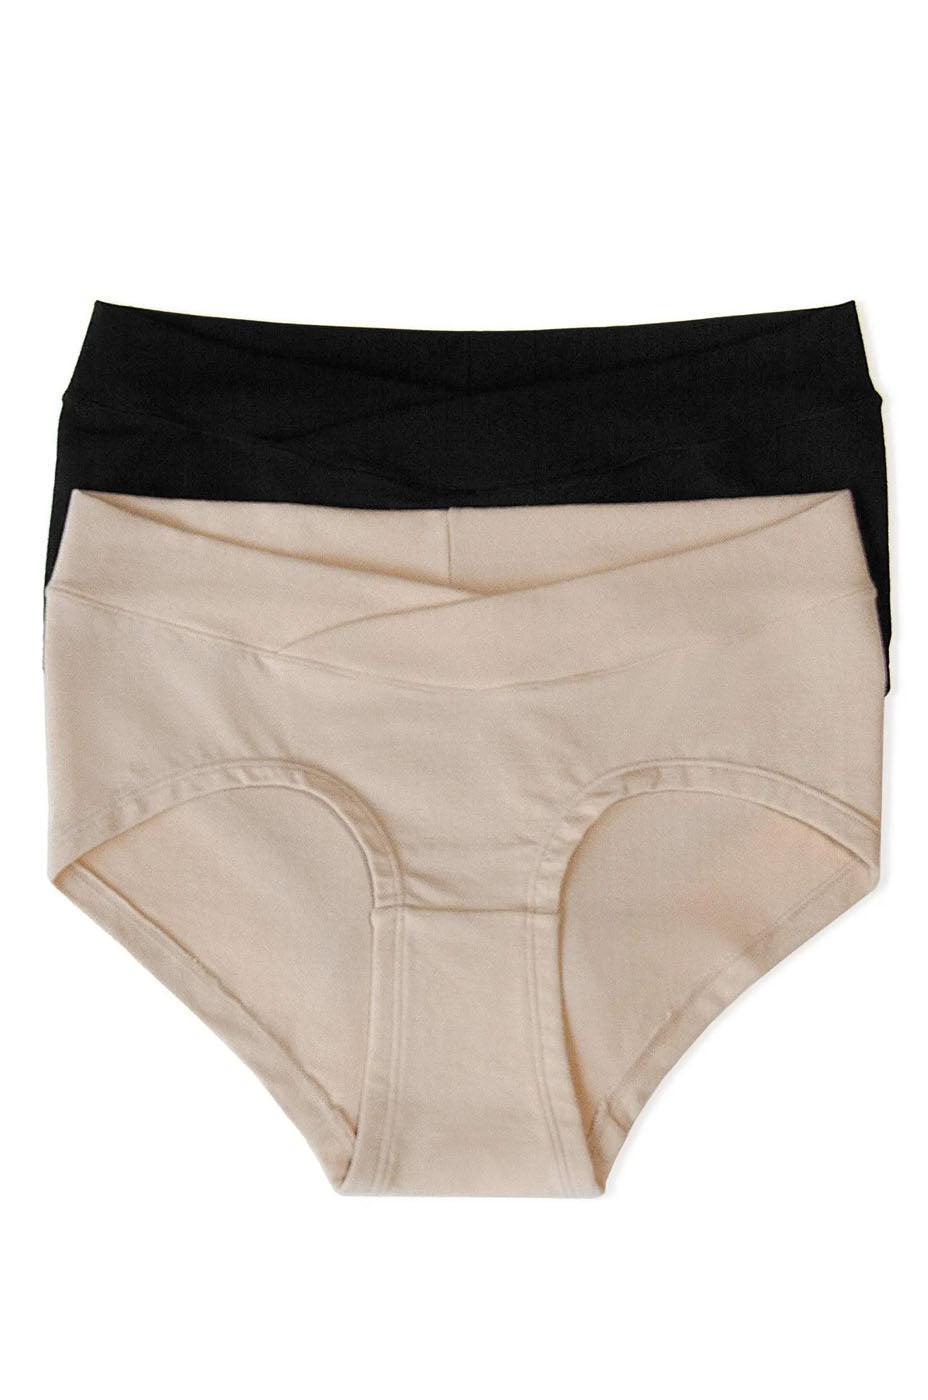 ElephANT Maternity stretchy pregnancy support underwear panties black /  beige